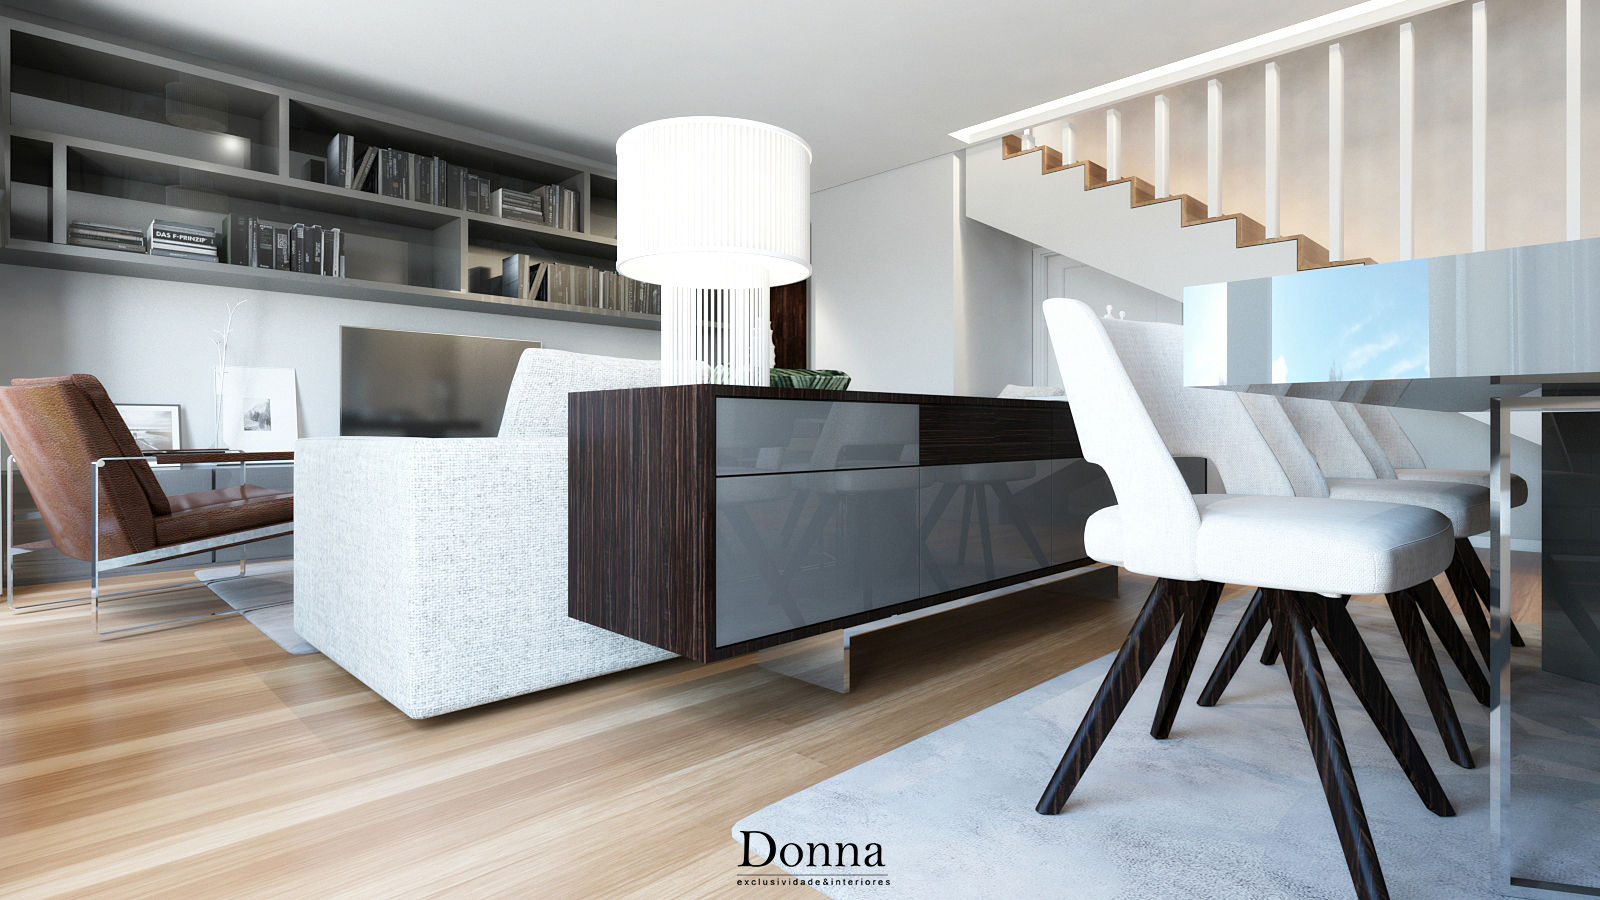 Apartamento Duplex no Porto, Donna - Exclusividade e Design Donna - Exclusividade e Design Modern dining room Dressers & sideboards